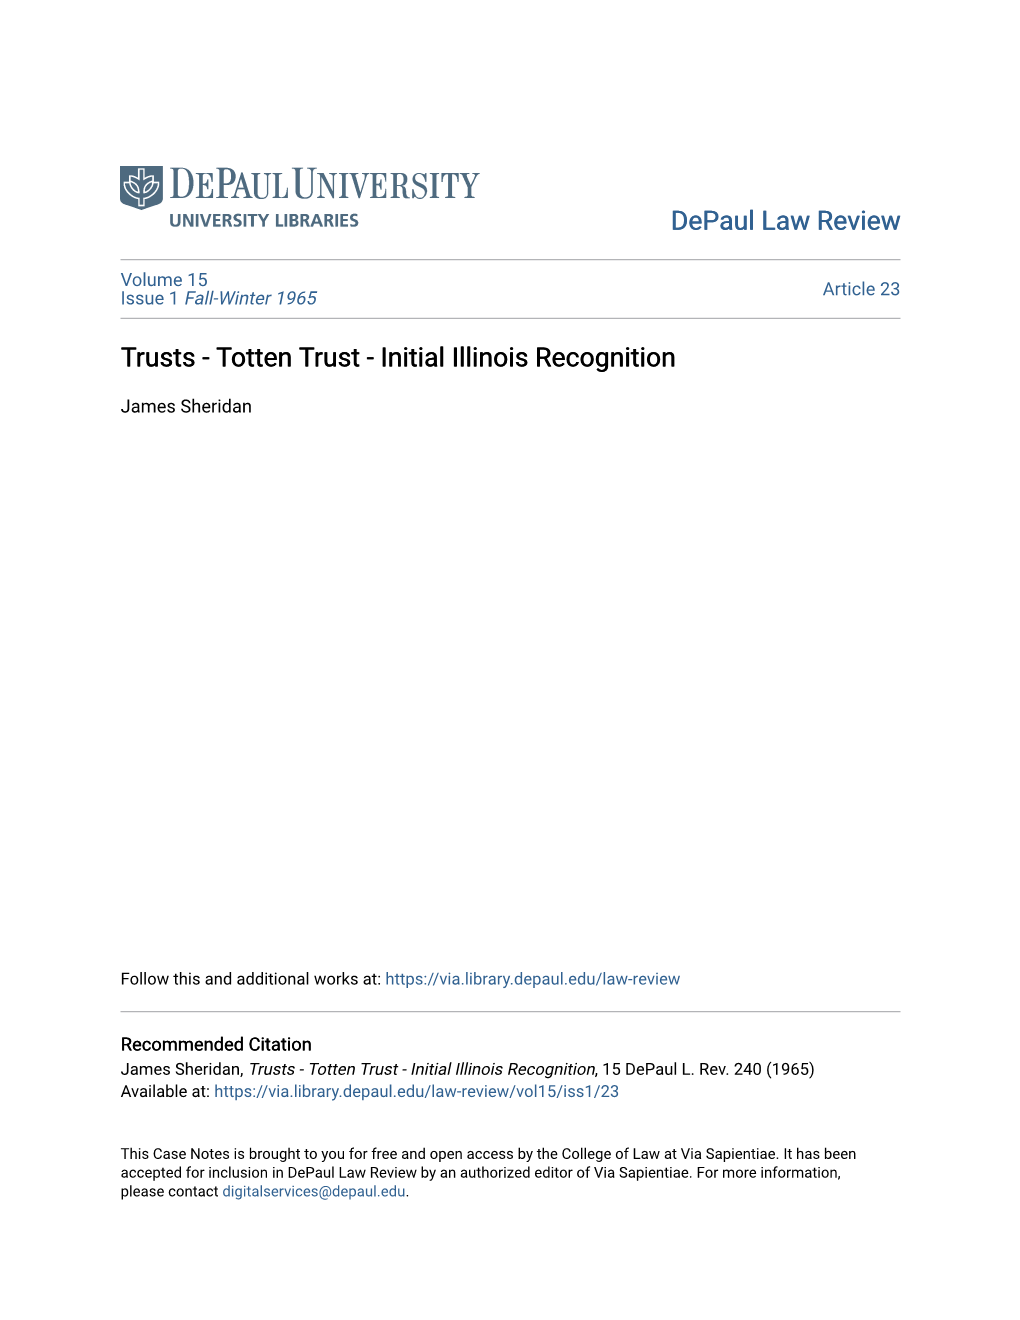 Totten Trust - Initial Illinois Recognition